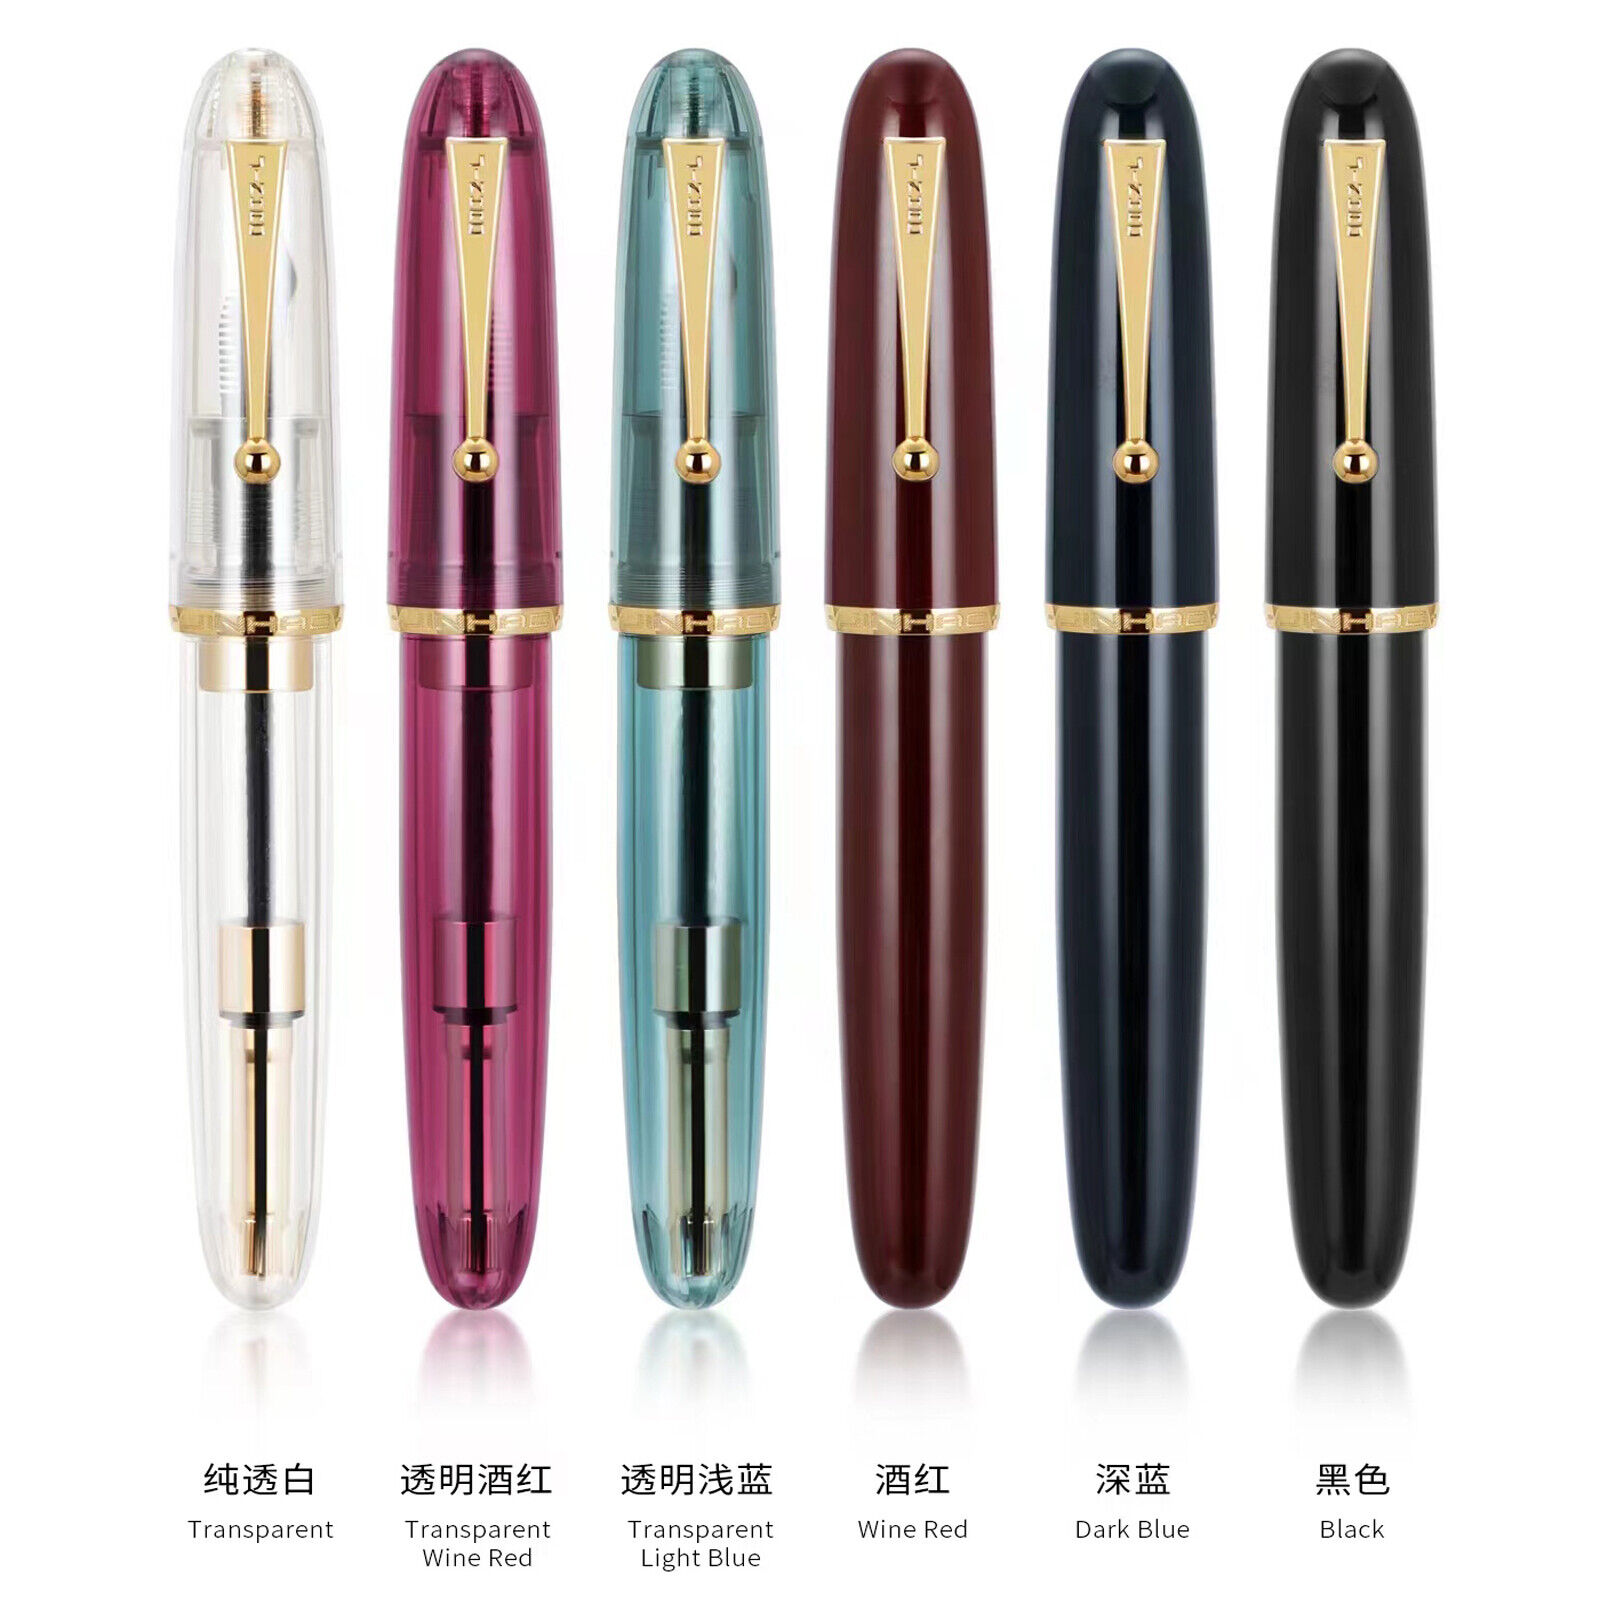 Jinhao 9019 Jumbo Fountain Pen Golden Accent Acrylic Screw Cap Without Box